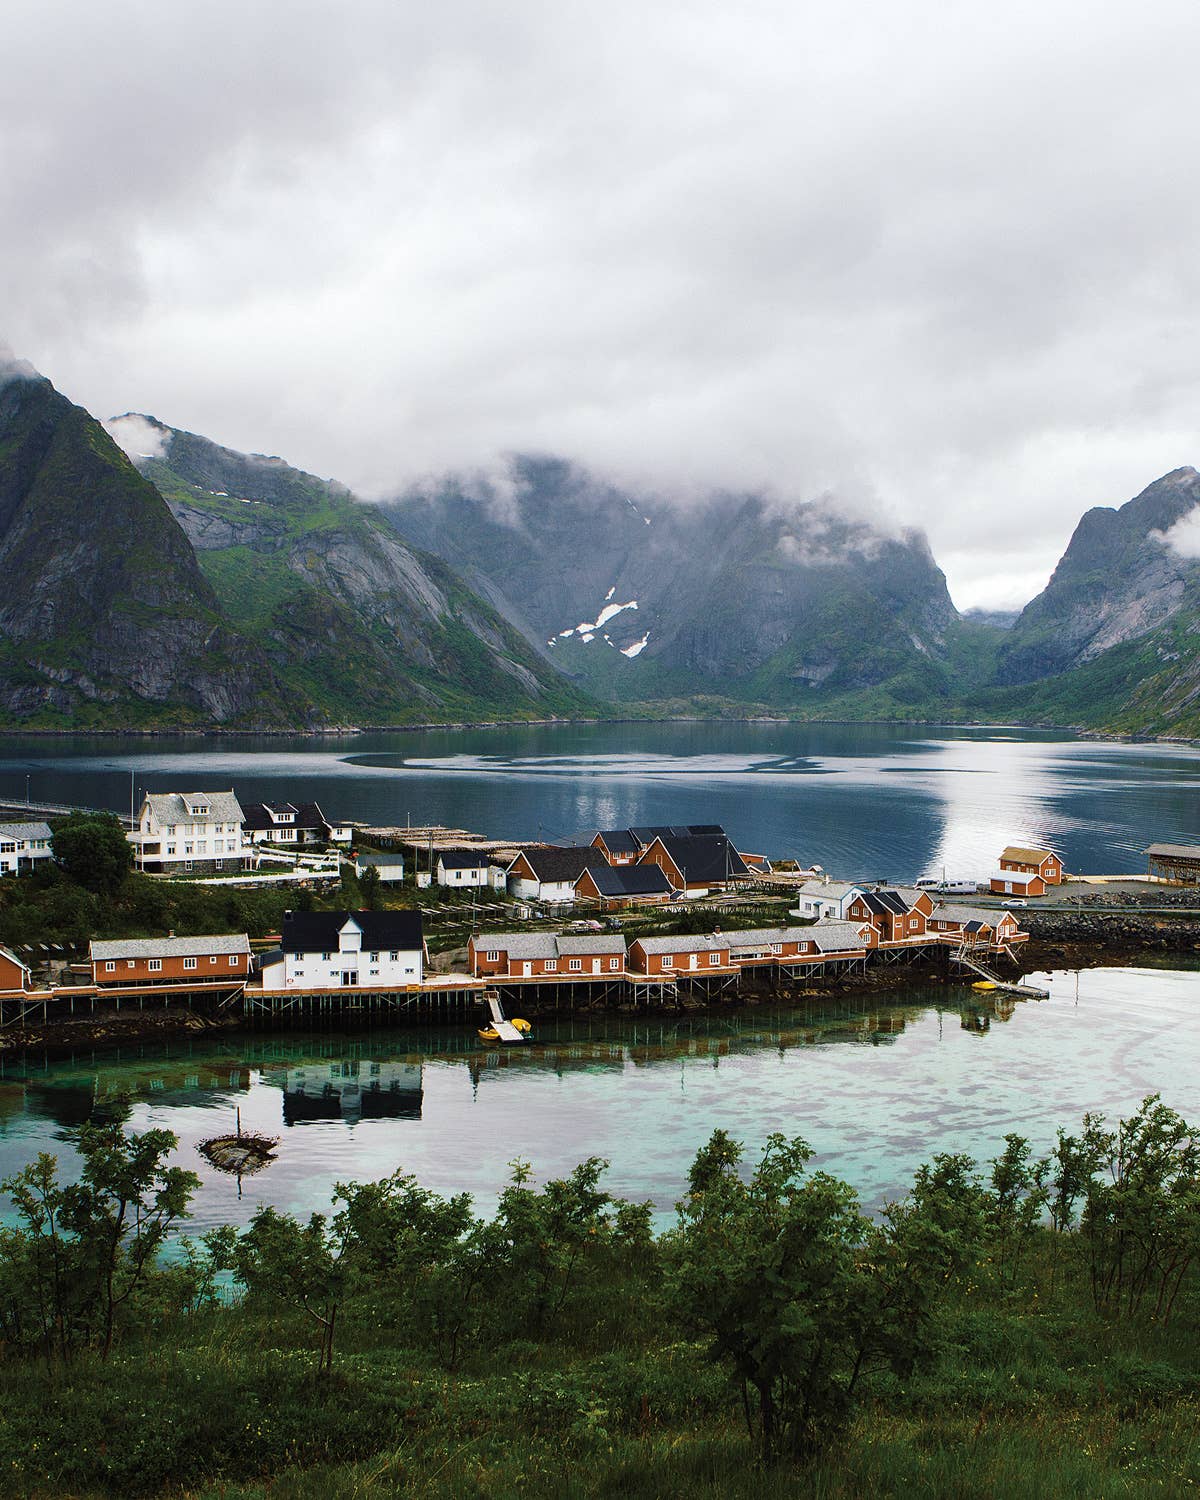 The remote archipelago of the Lofoten Islands, Norway